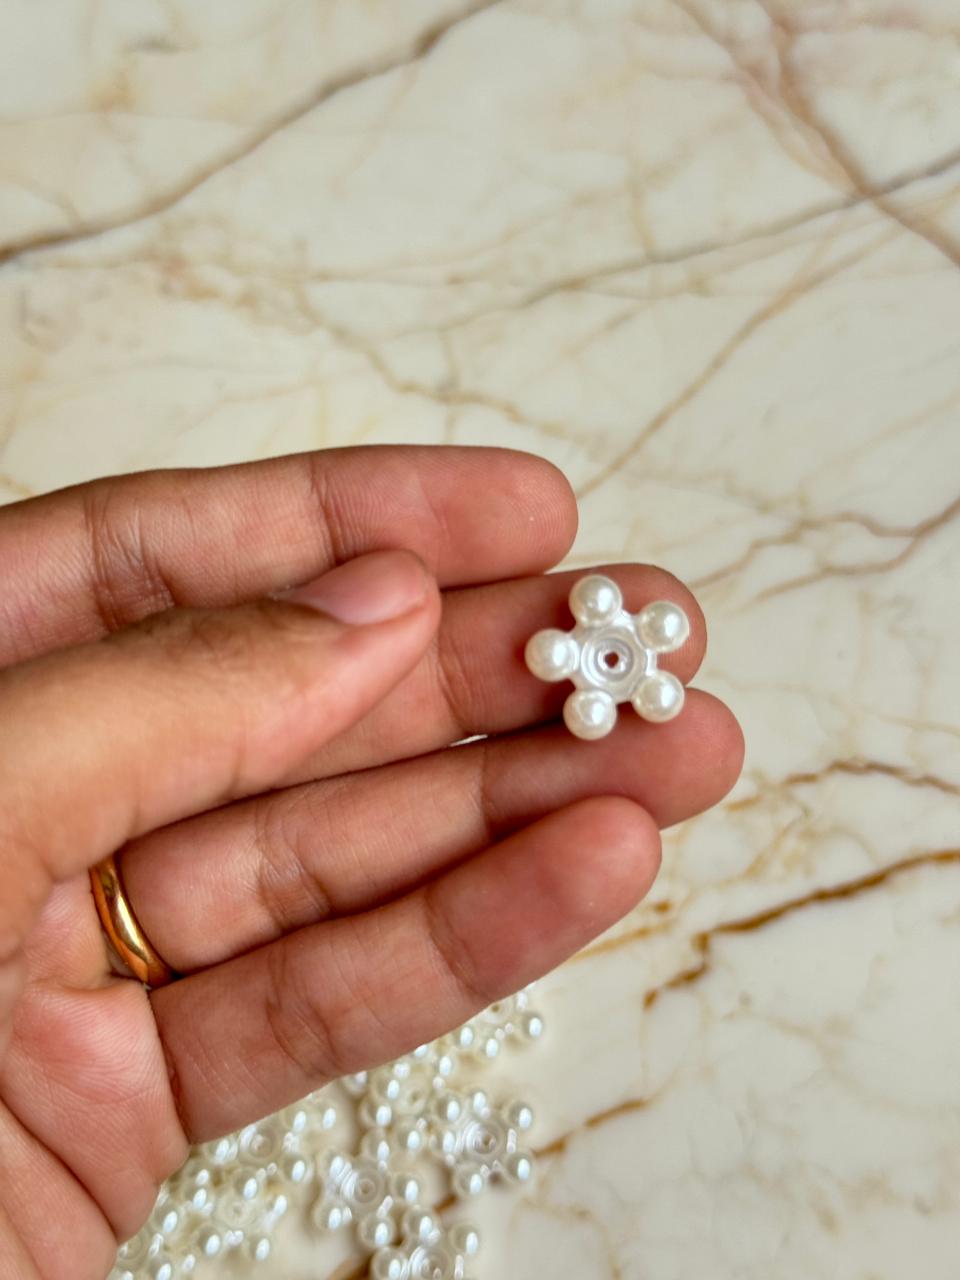 5 Pearl Flower Beads